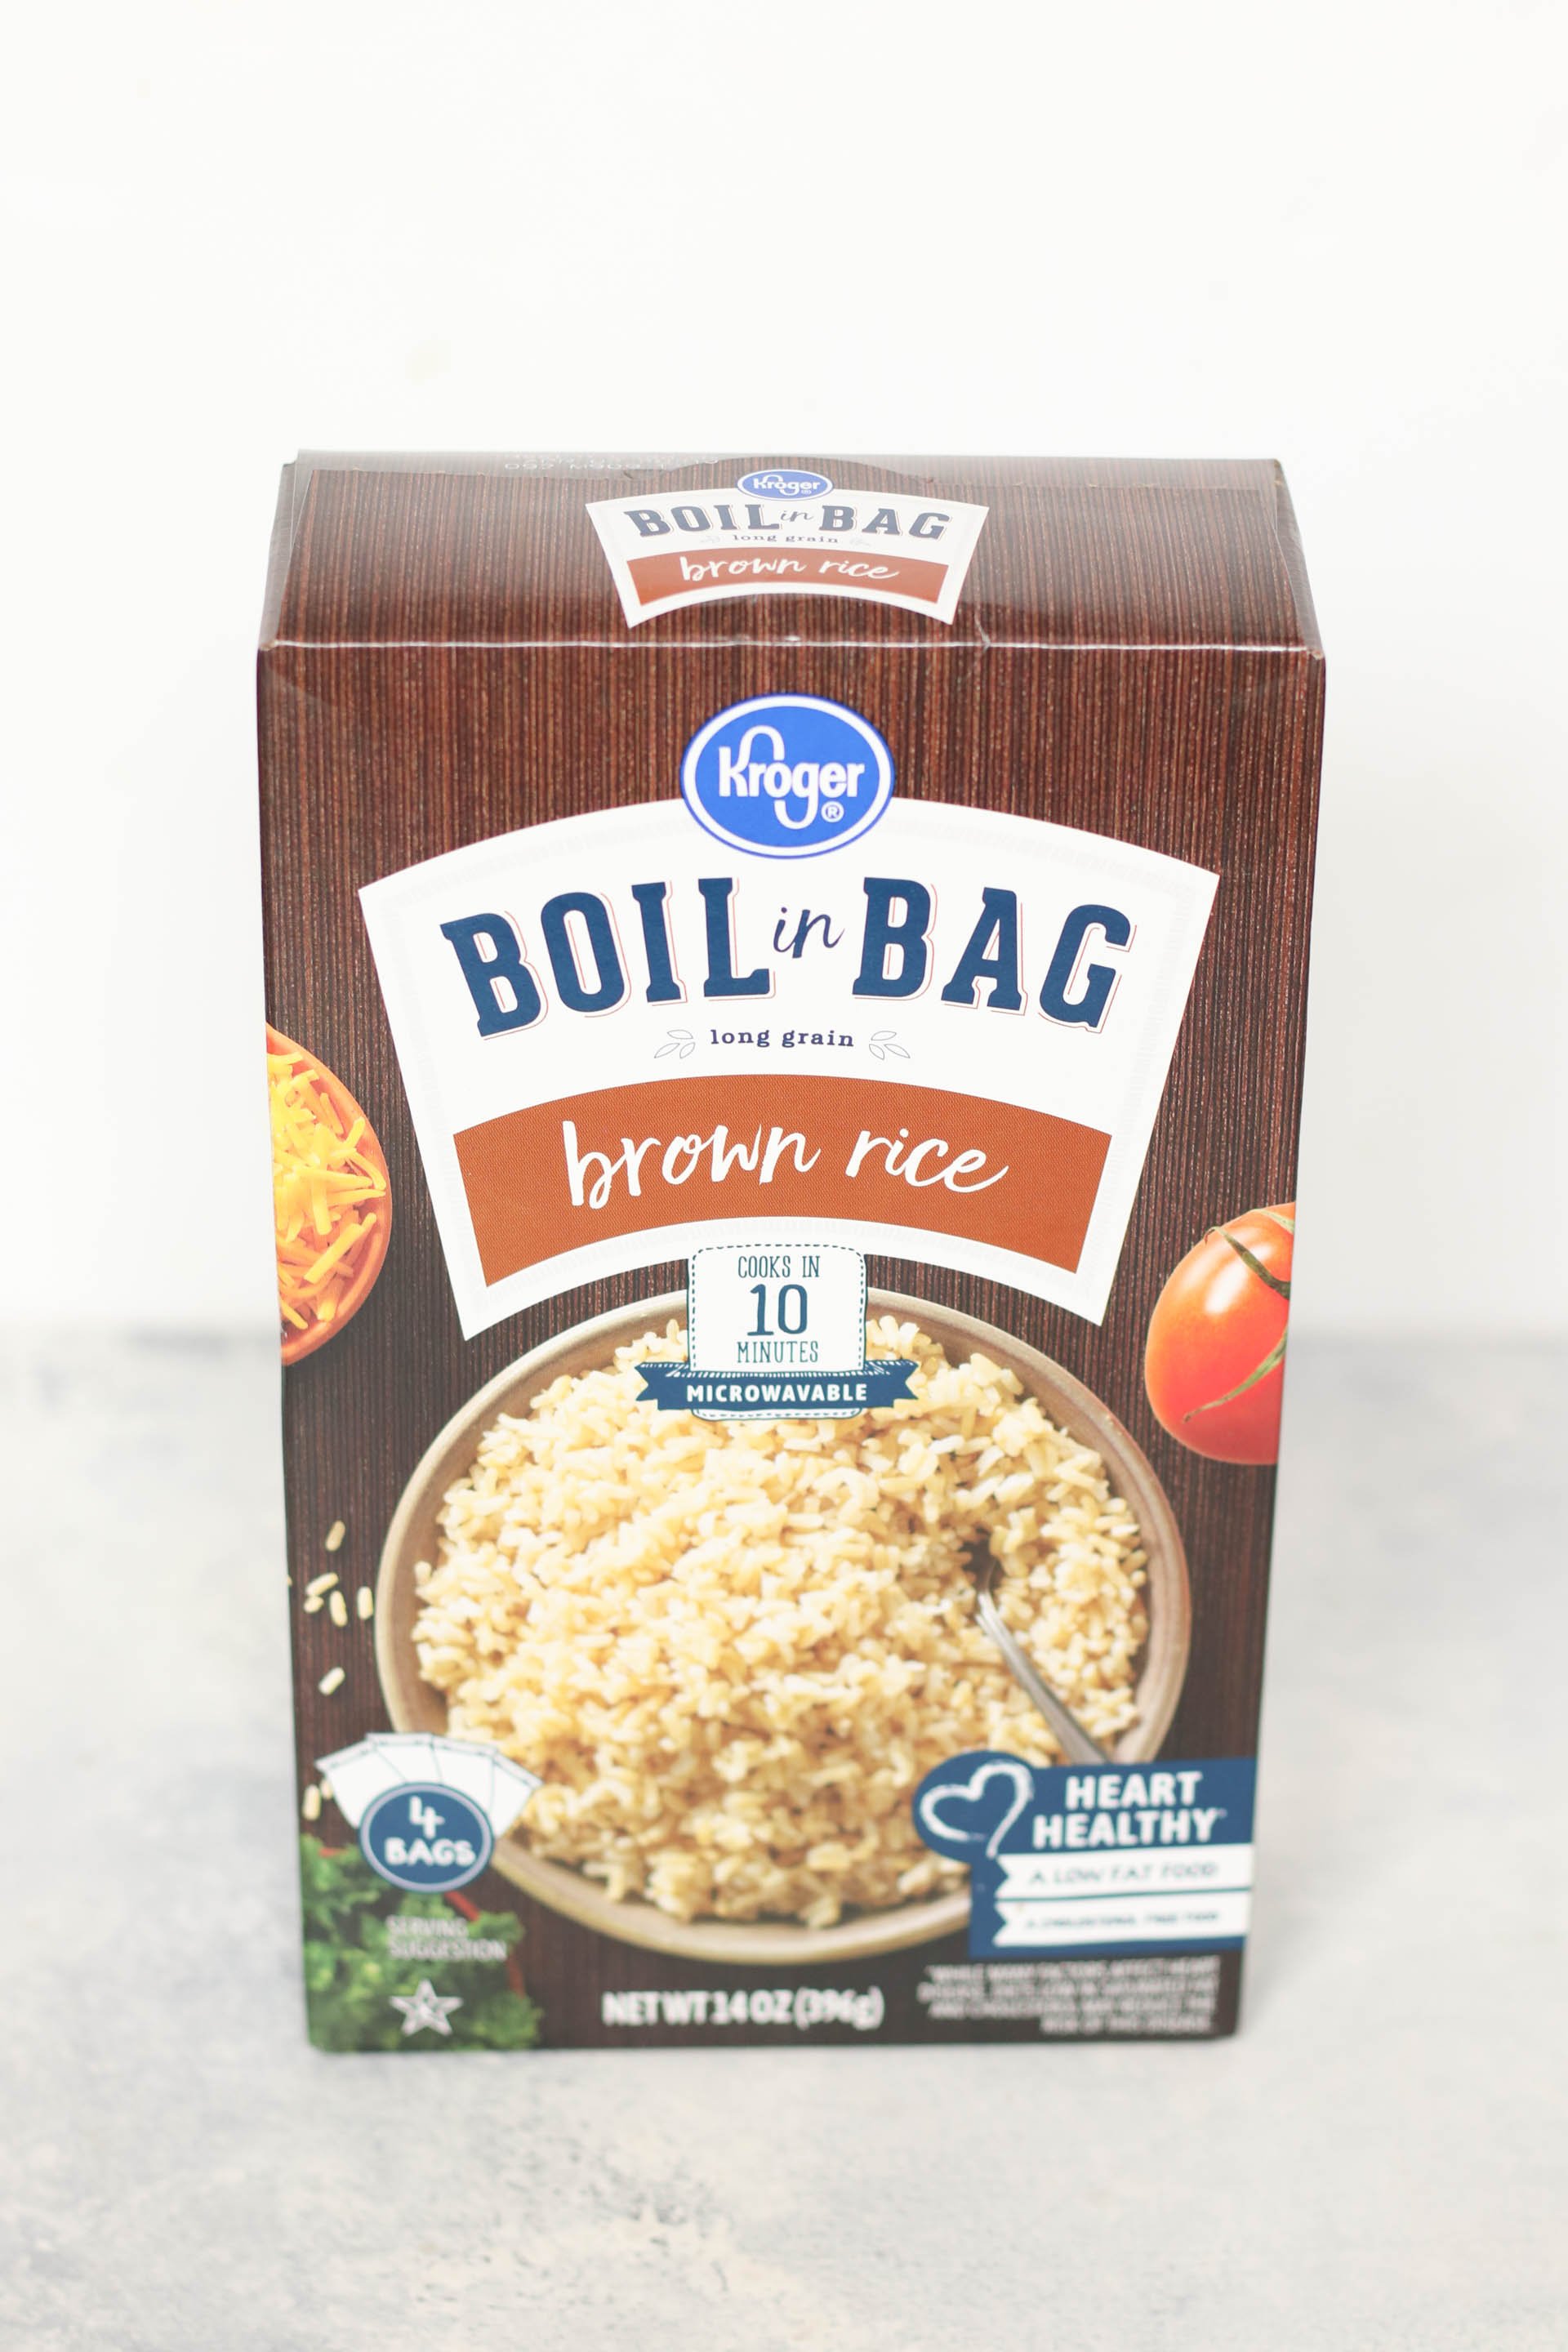 Boil in a bag brown rice